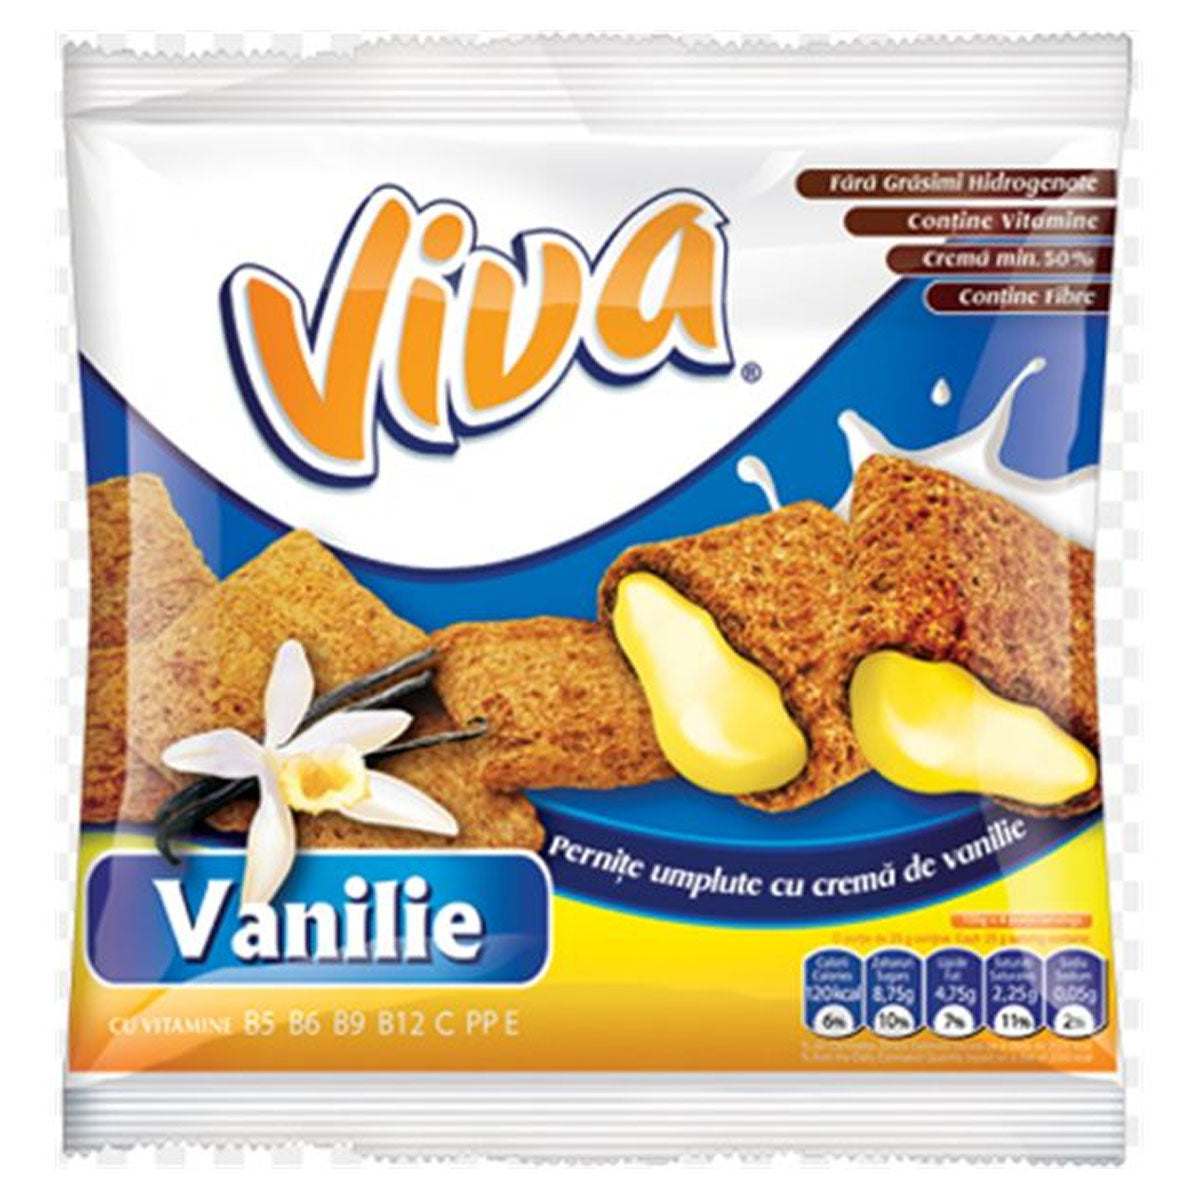 Viva - Vanilla Snack - 200g - Continental Food Store